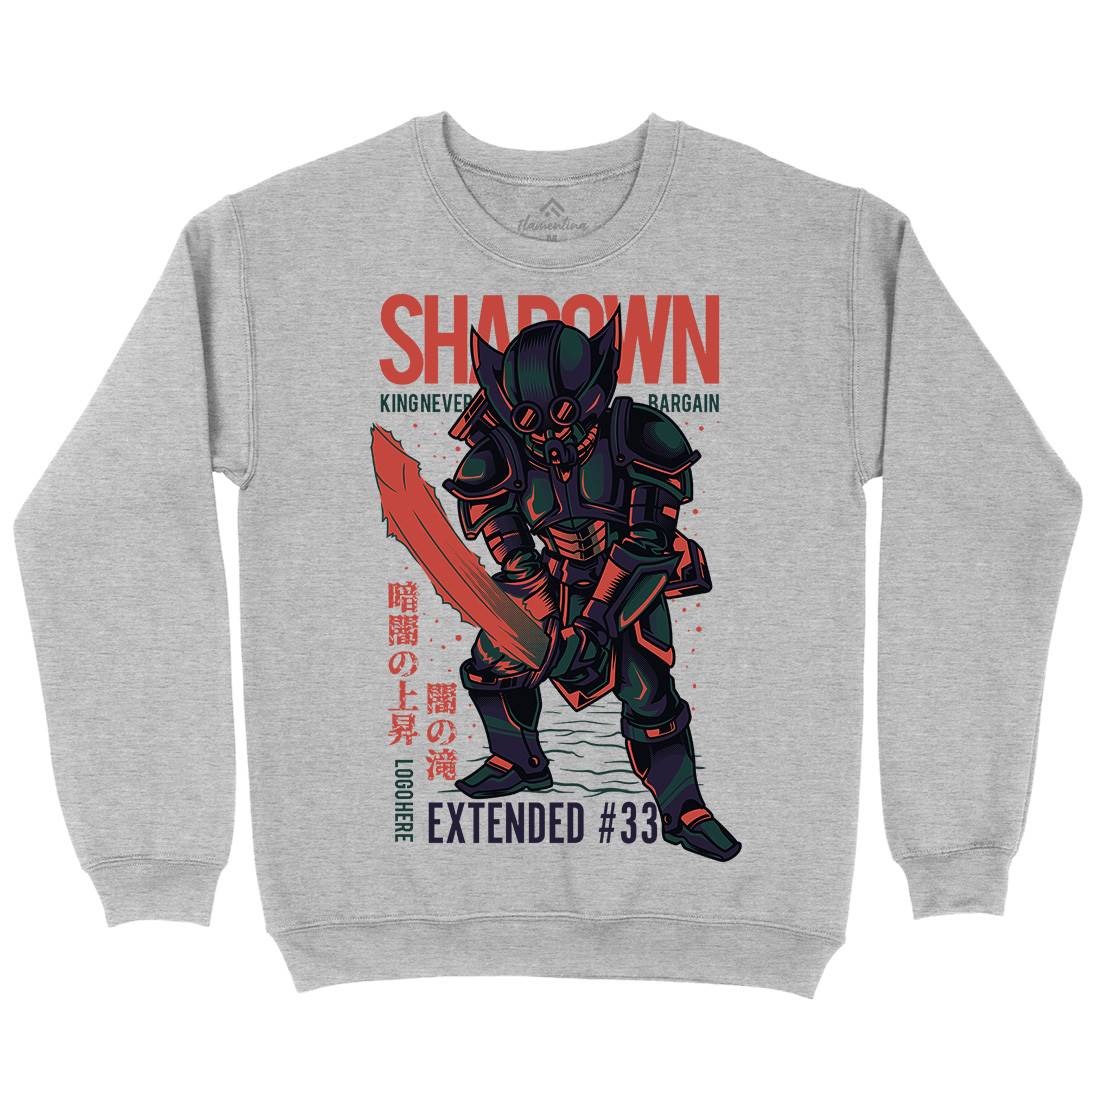 Shadown Knight Mens Crew Neck Sweatshirt Warriors D812